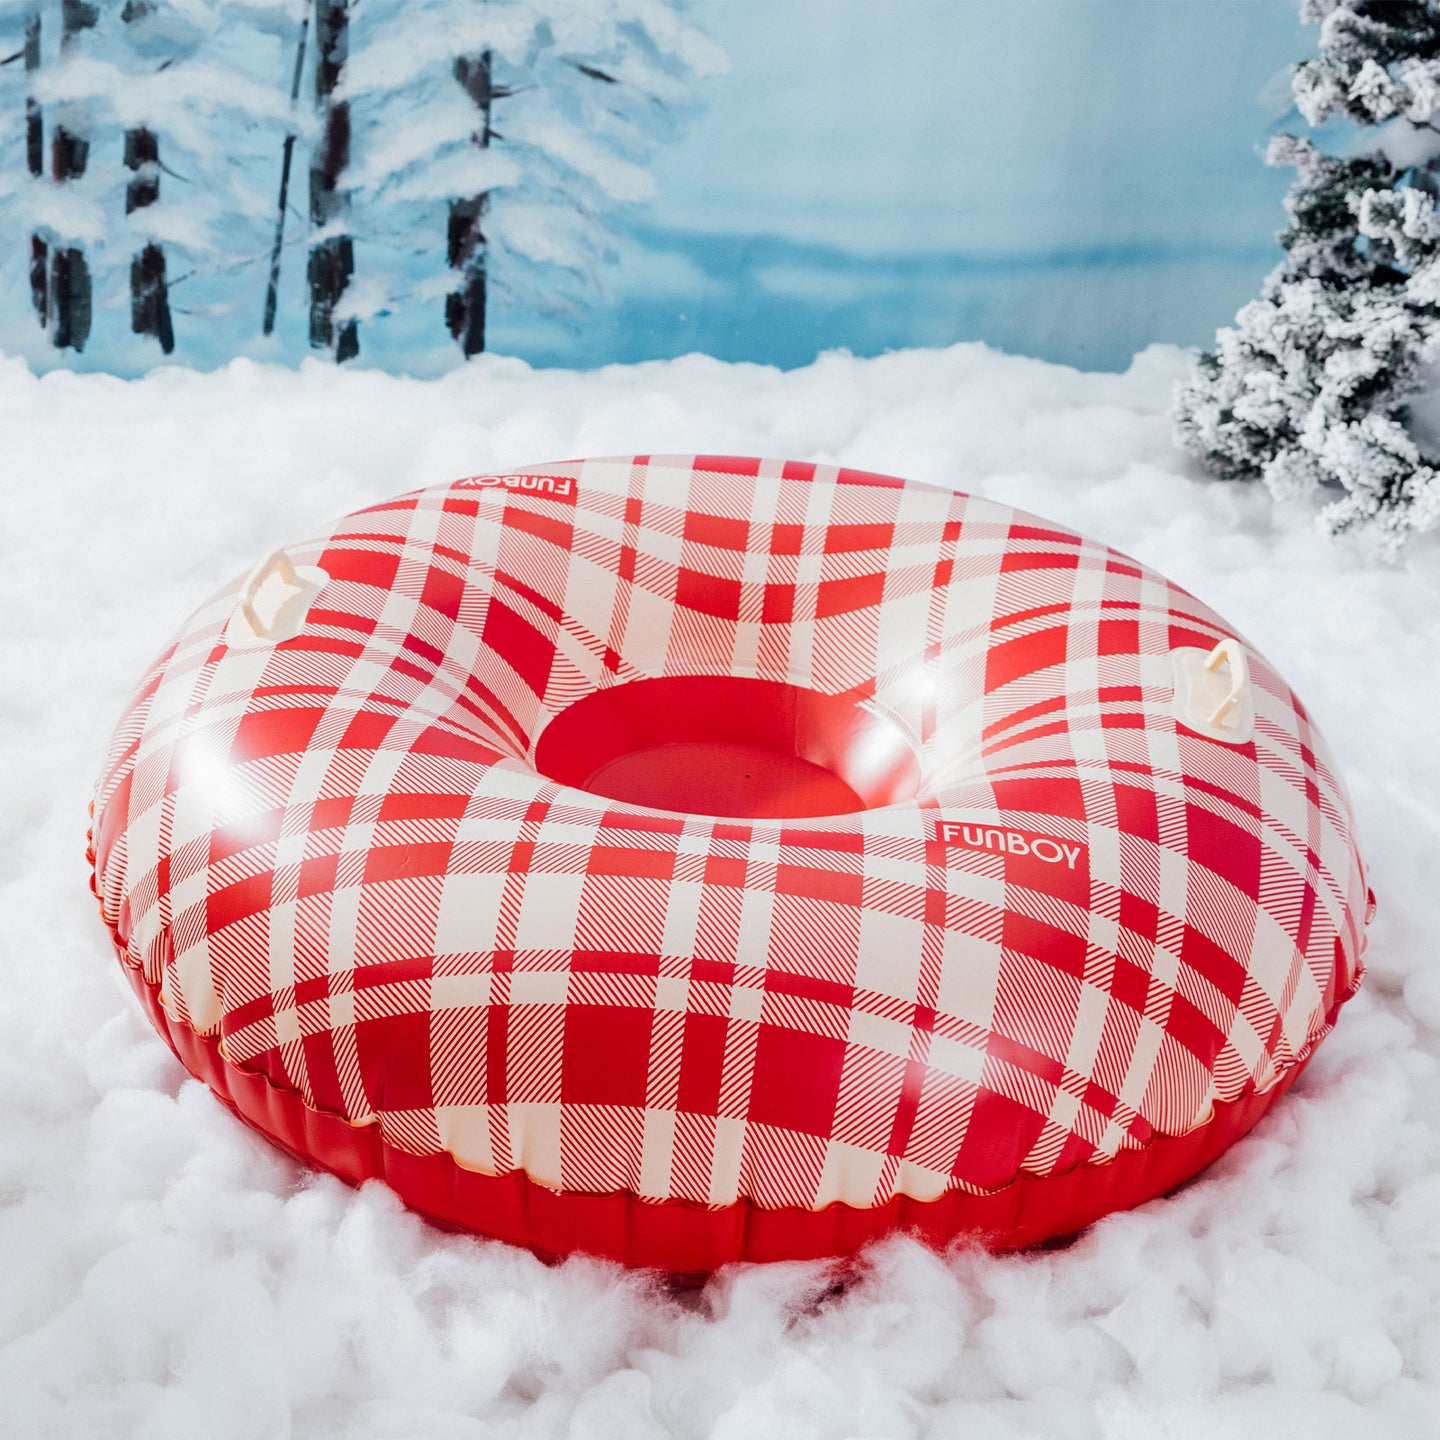 Retro Plaid Inflatable Snow Tube for Sledding